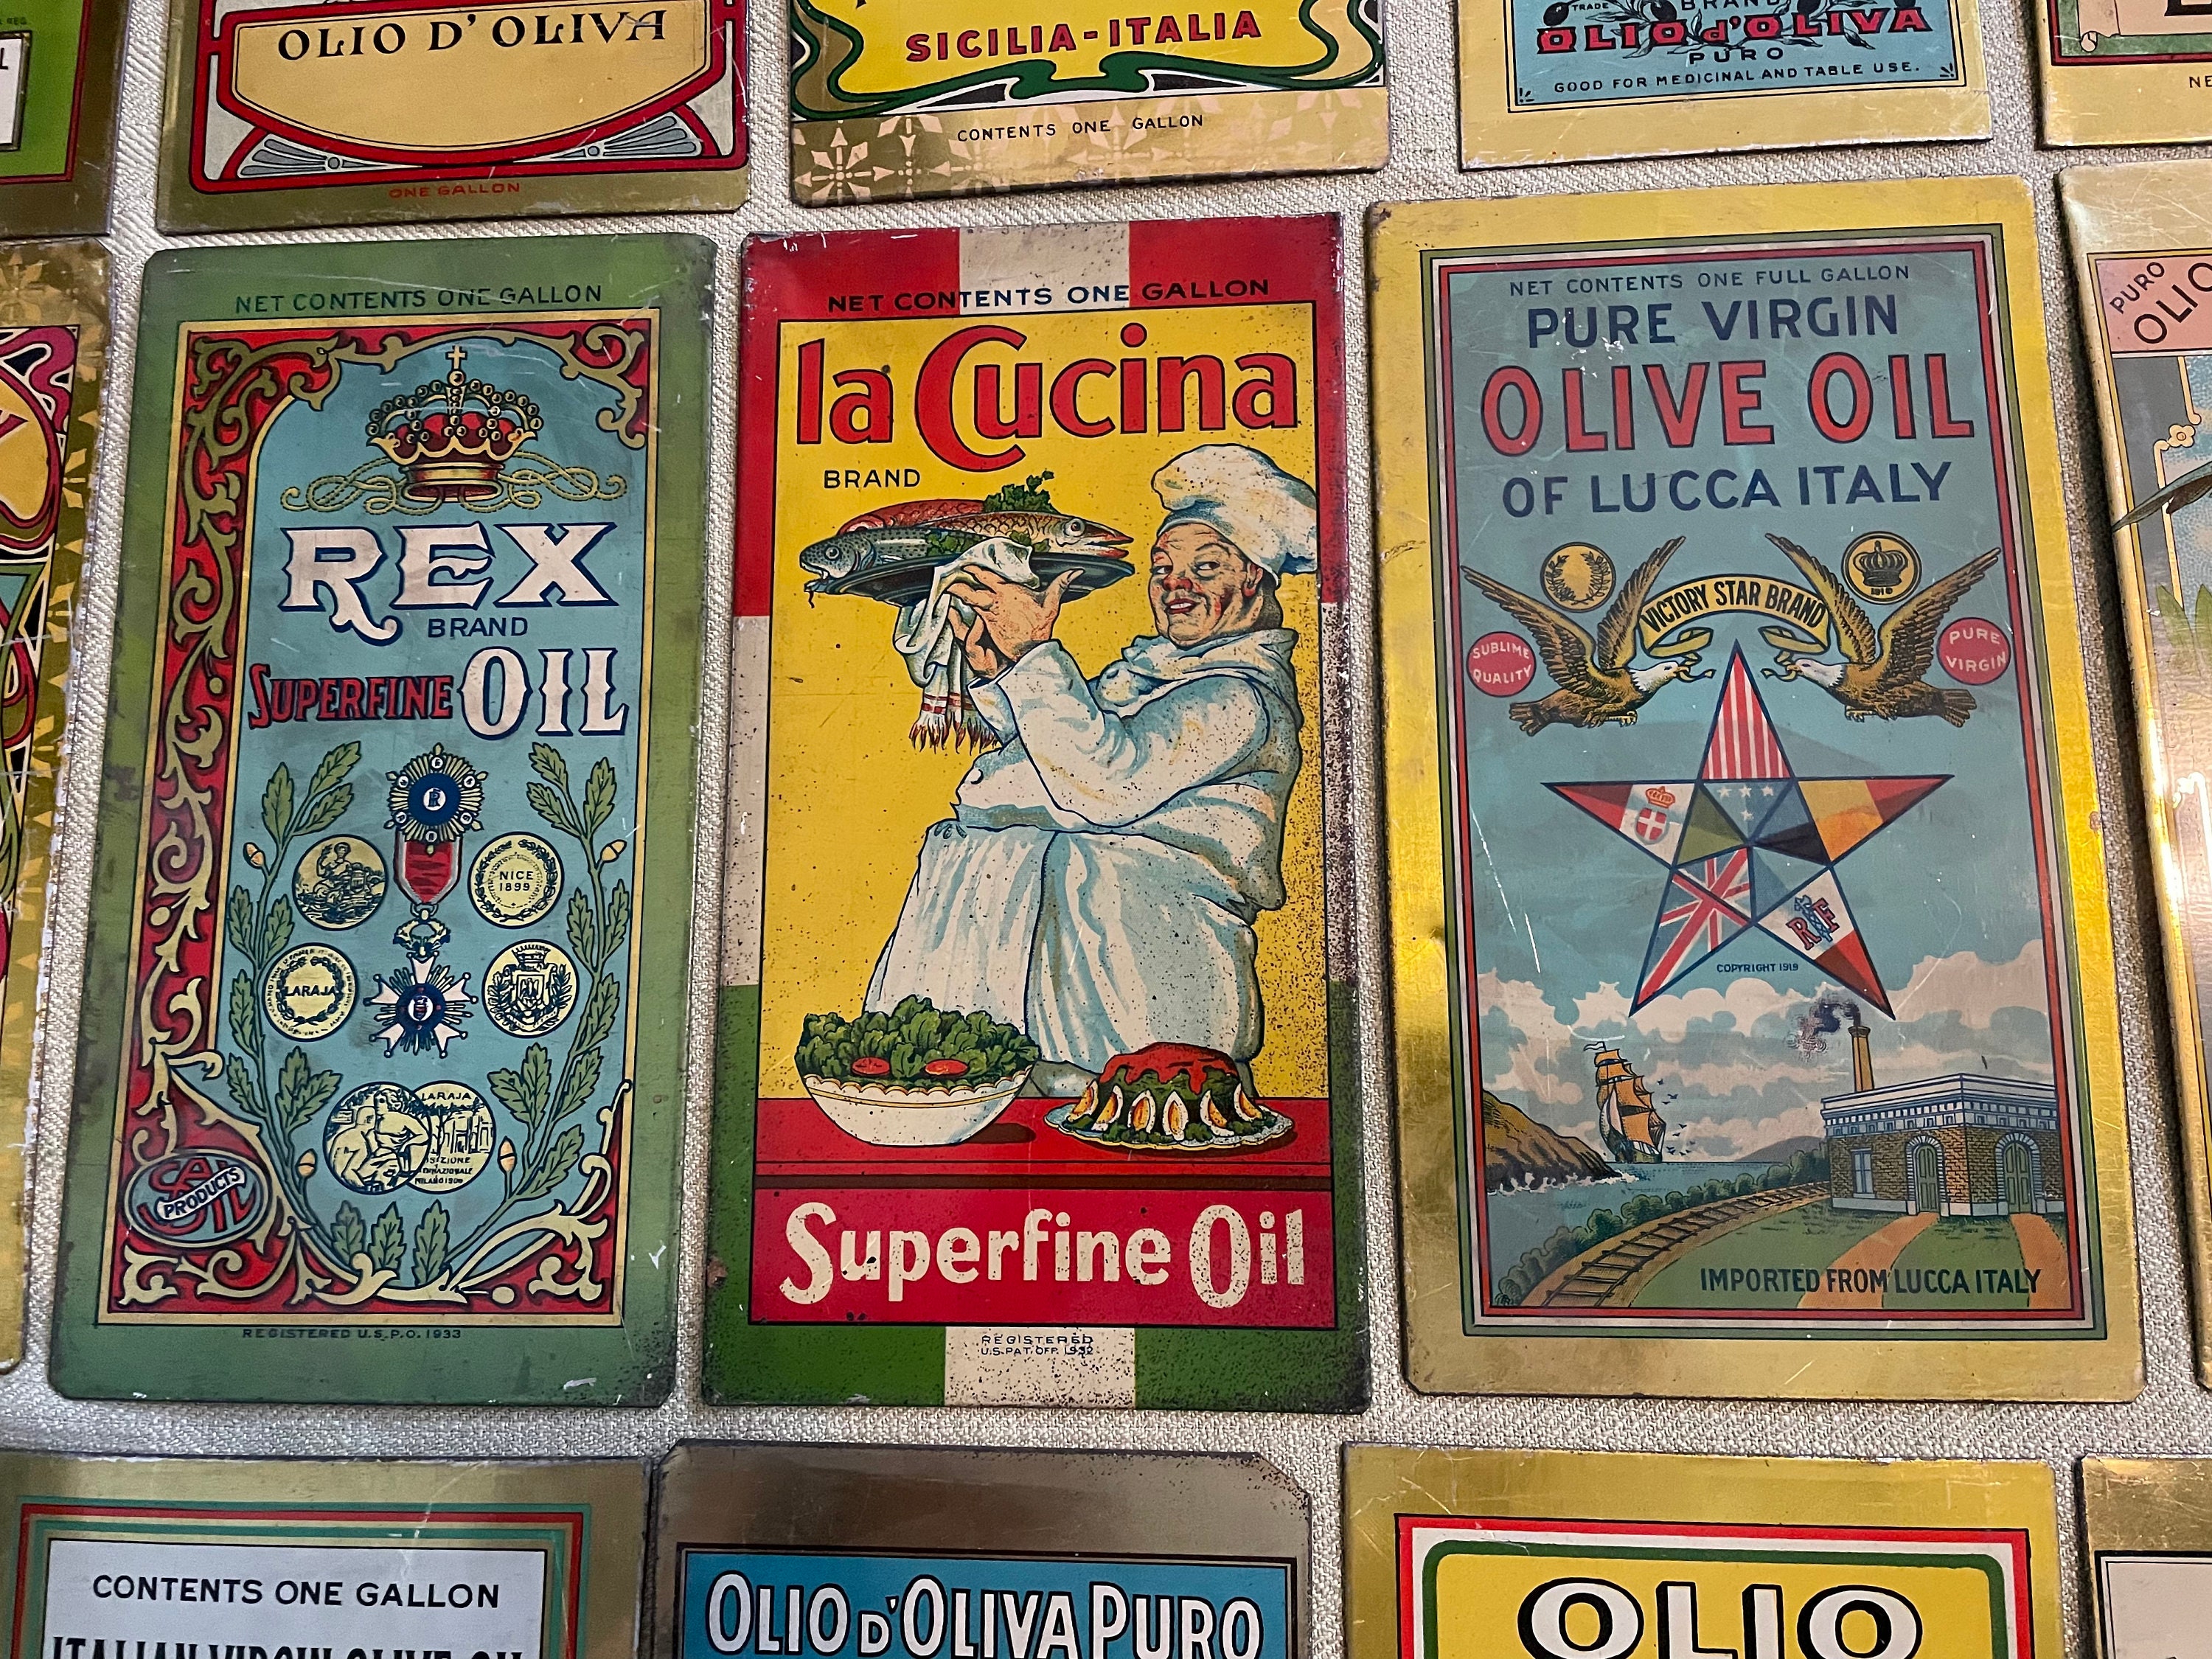 Italian silver 'Motor Oil Can' Olive Oil Pourer, 1960 – Pullman